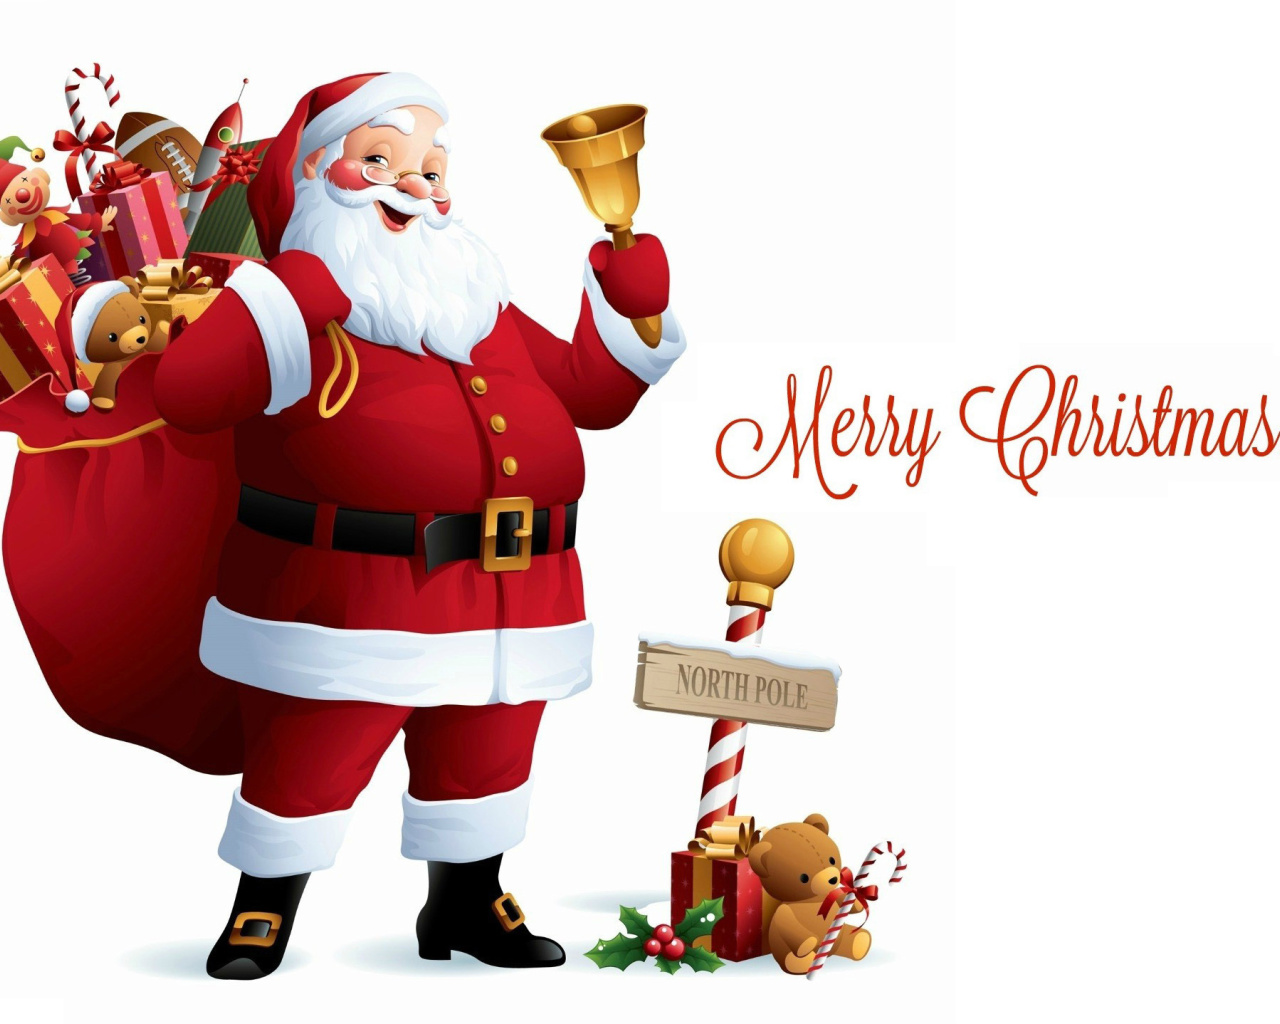 Das HO HO HO Merry Christmas Santa Claus Wallpaper 1280x1024